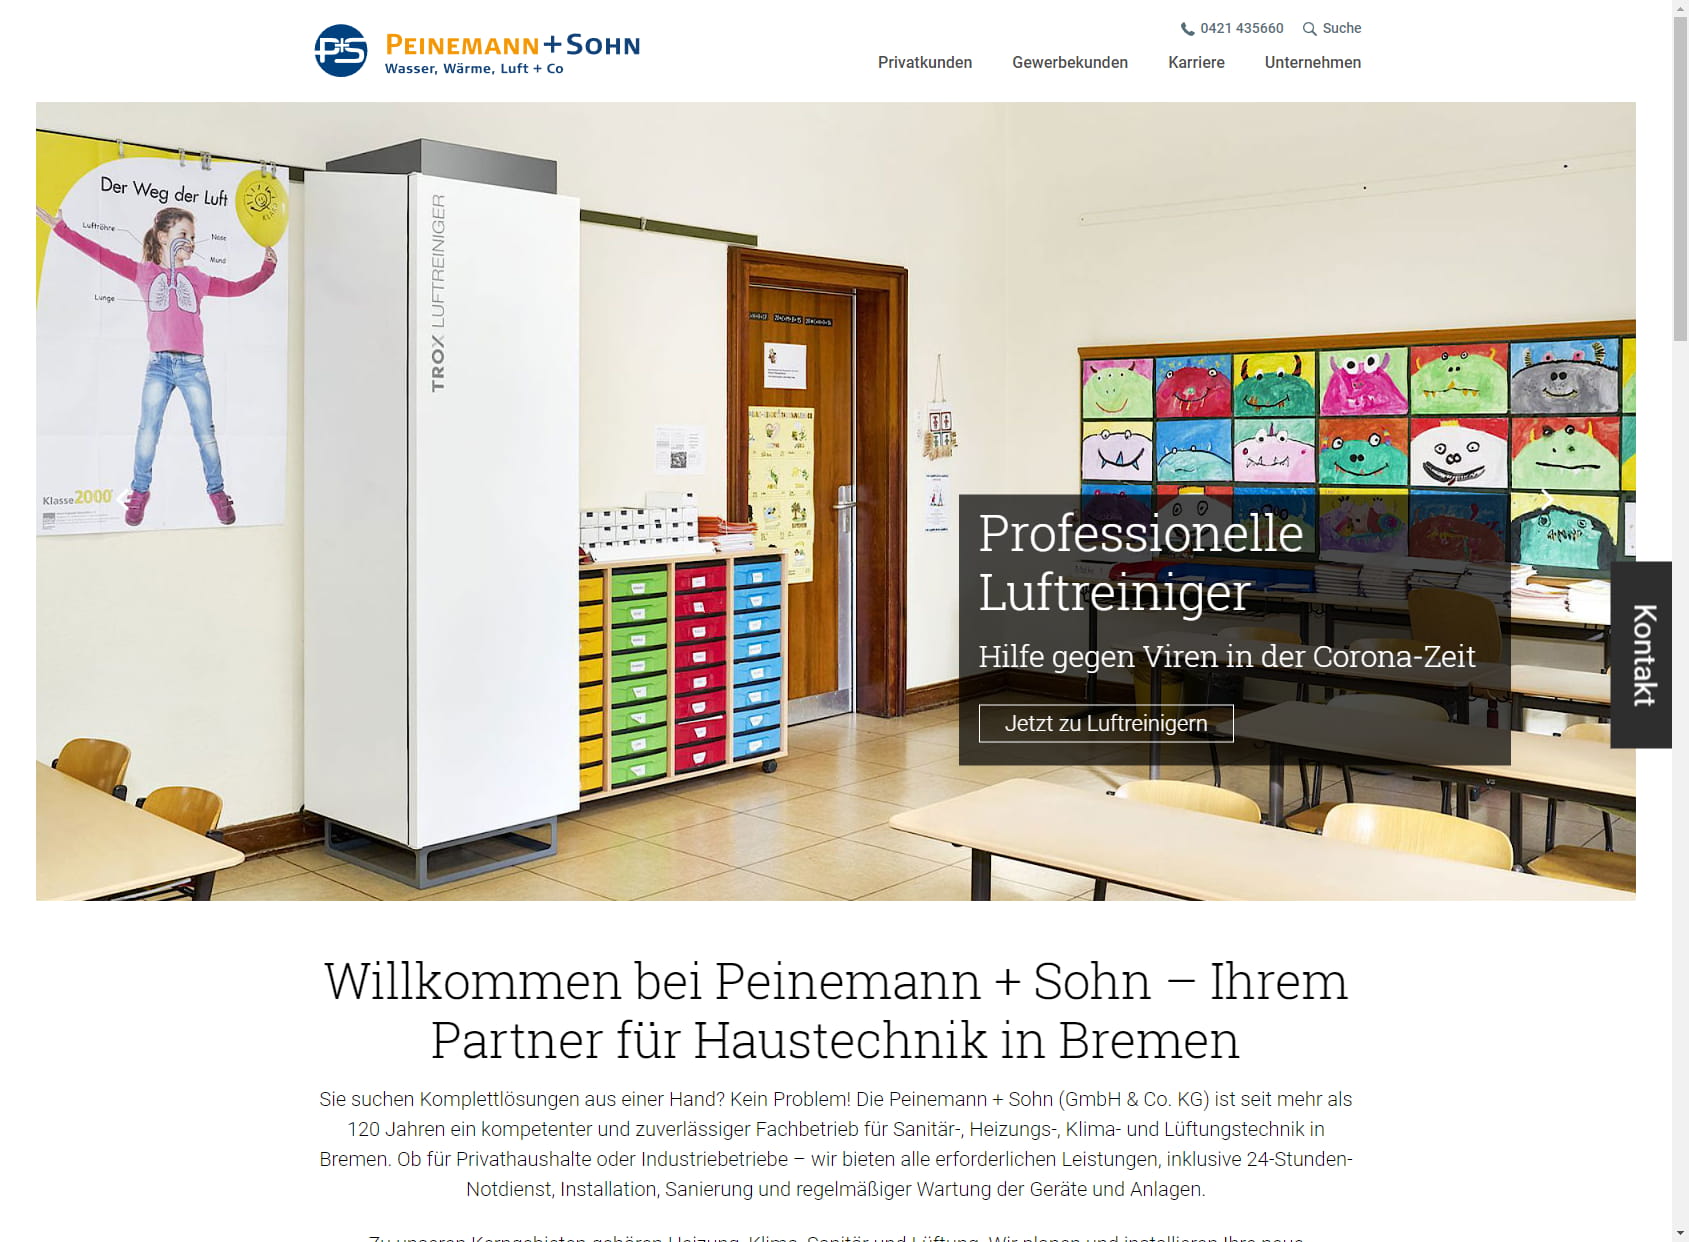 Peinemann + Sohn (GmbH & Co. KG)